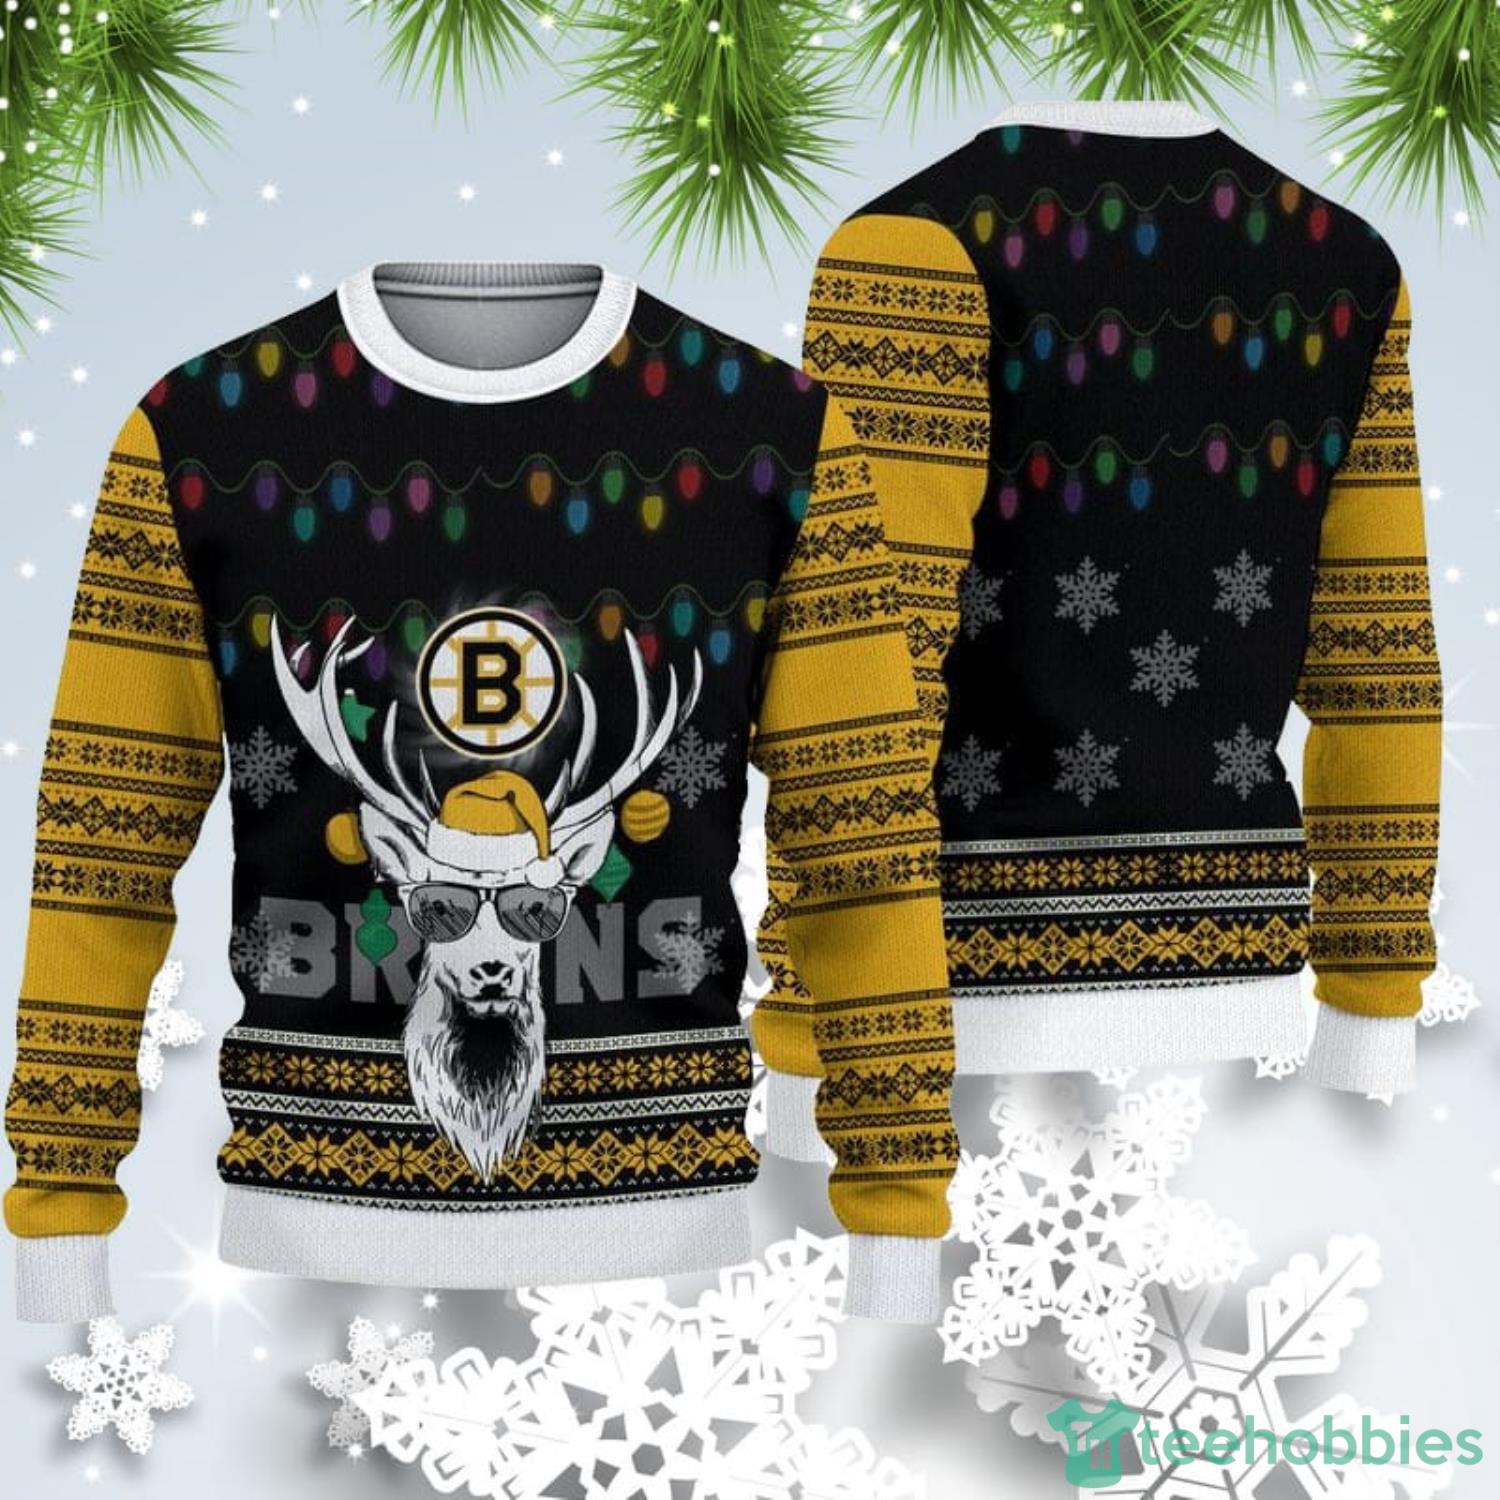 Boston Bruins Fans Caro Pattern Ugly Christmas Sweater Gift - Freedomdesign